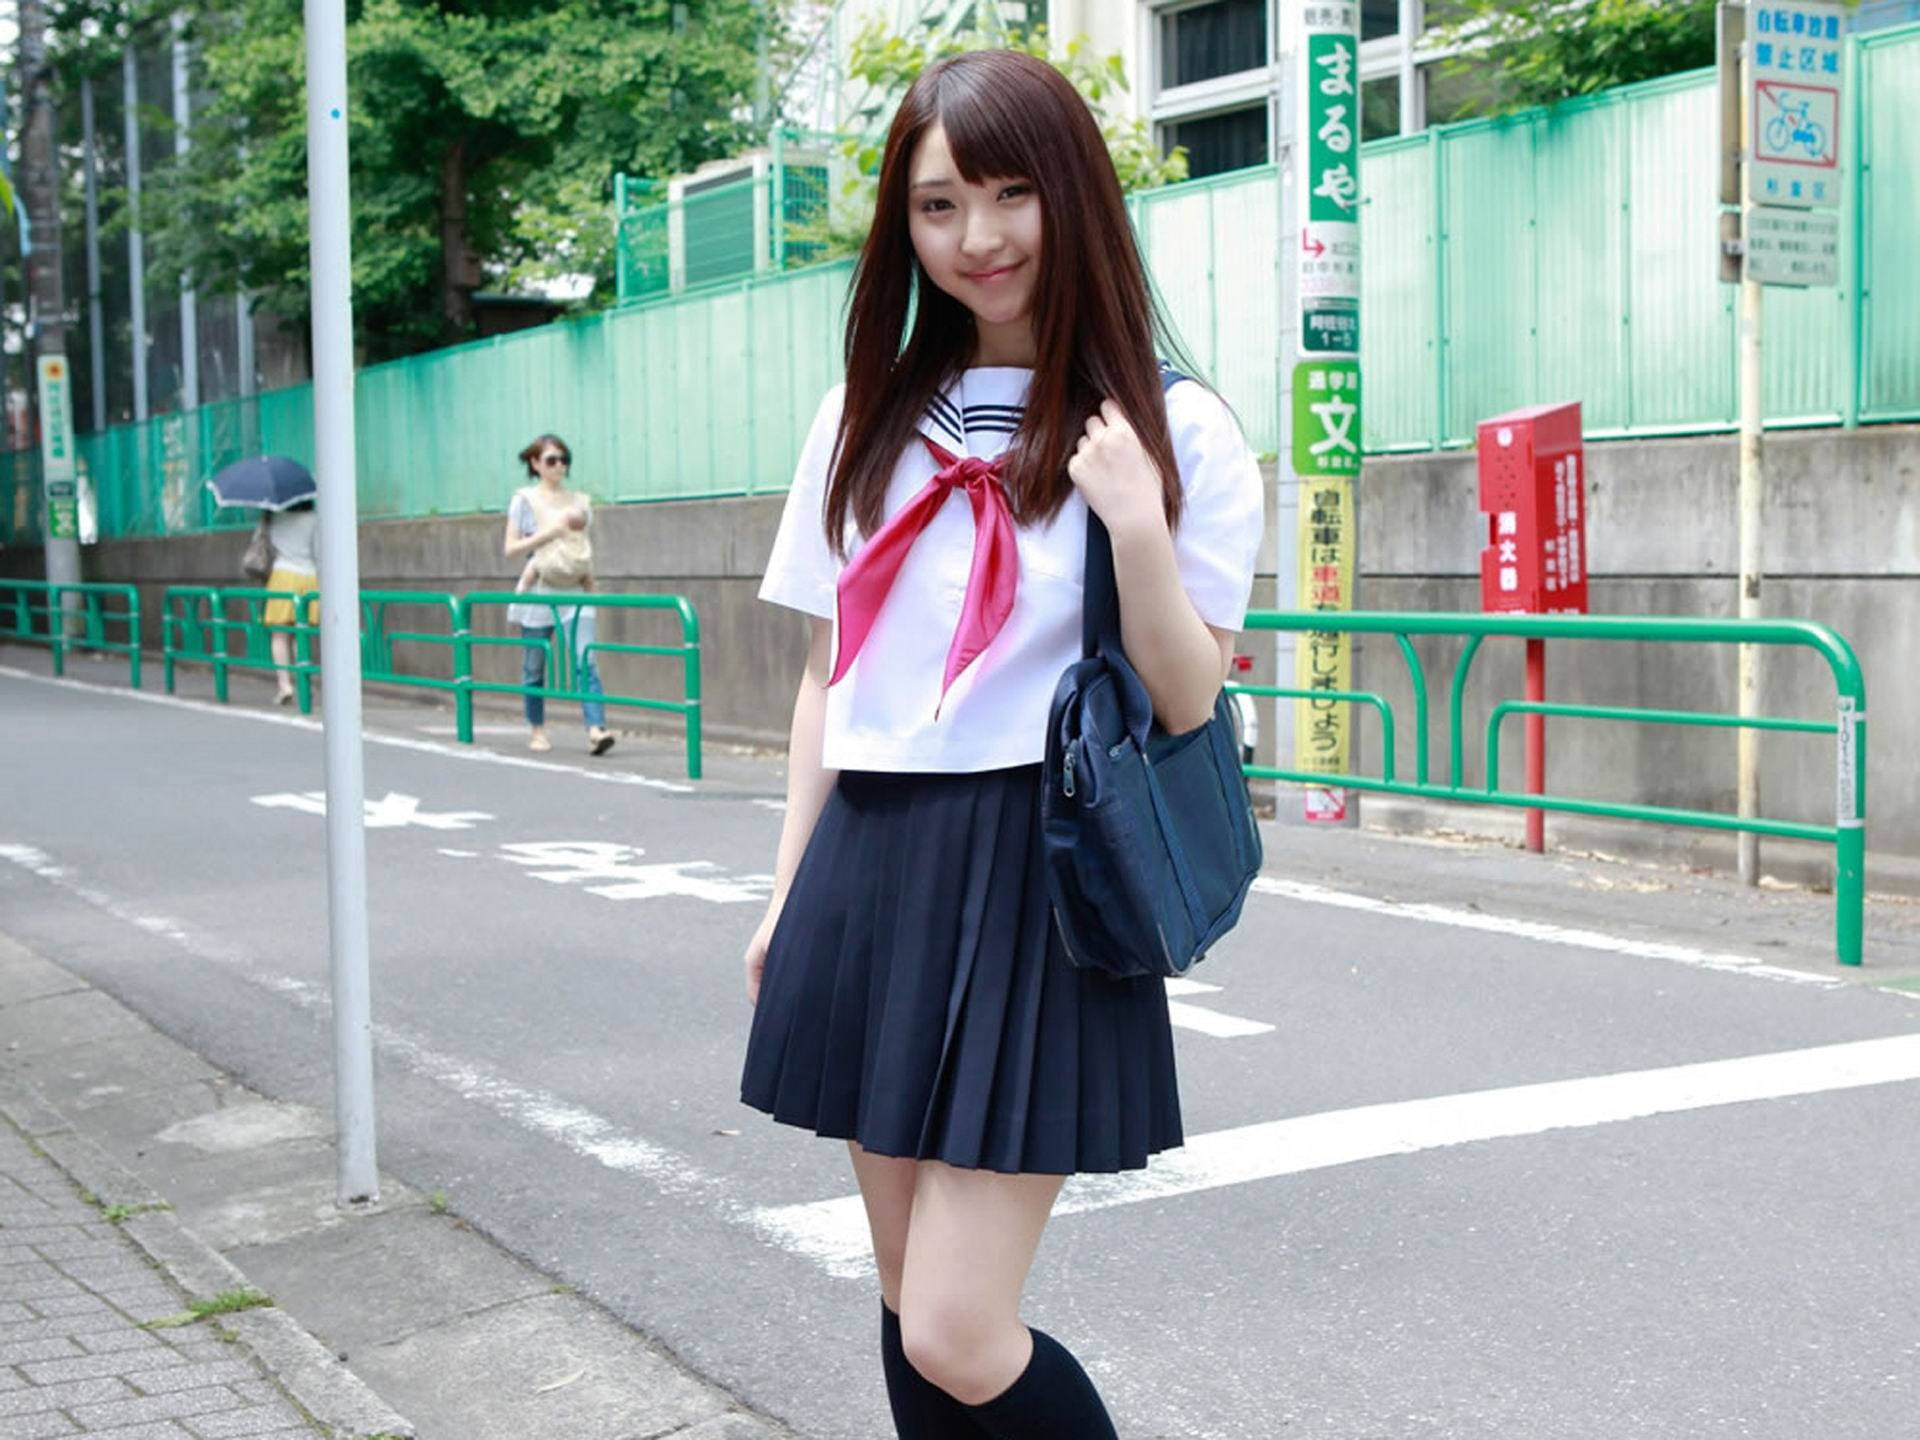 Japanese Girl Student Background